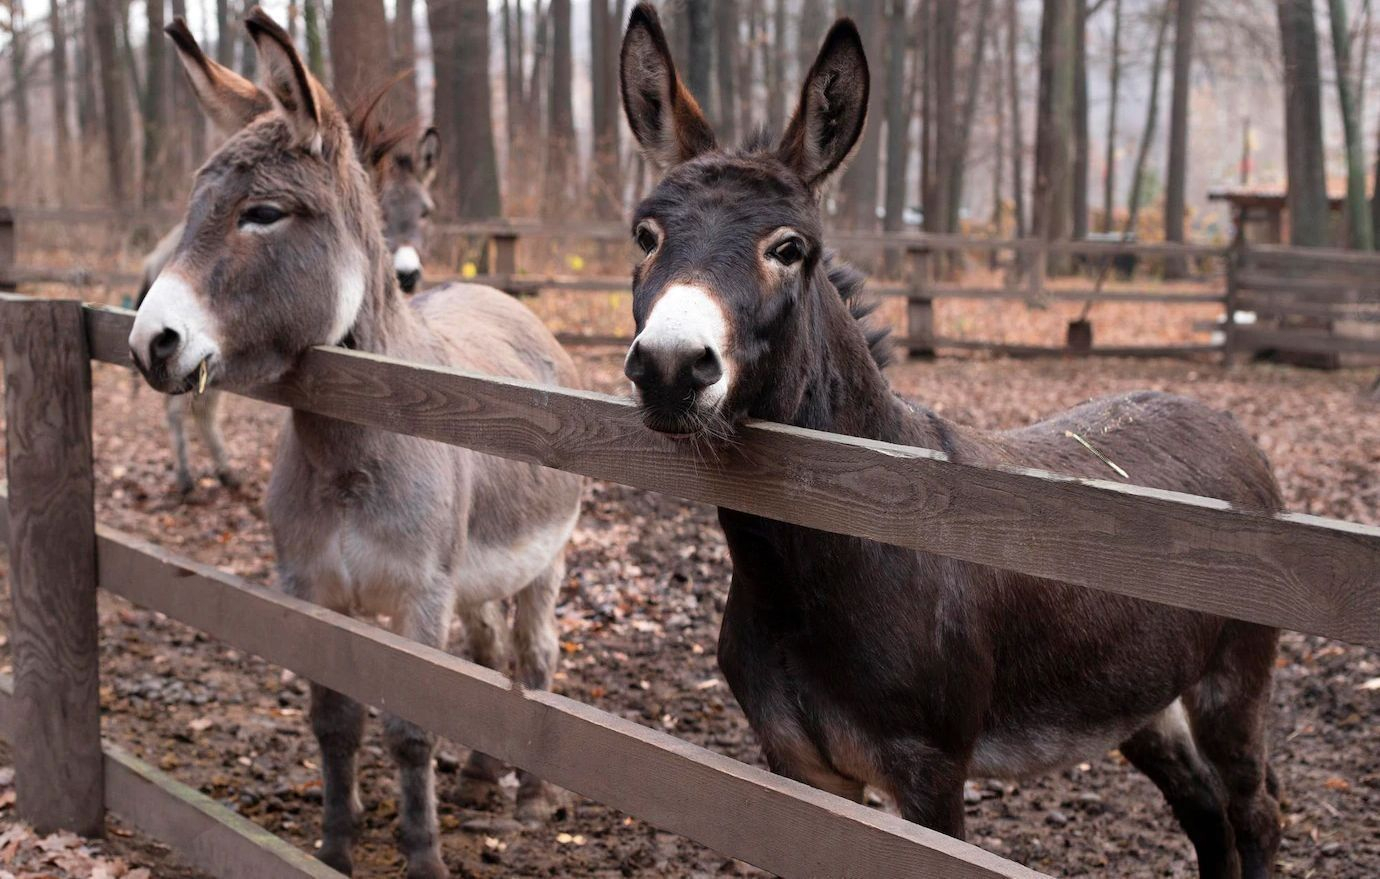 Donkeys from Pakistan